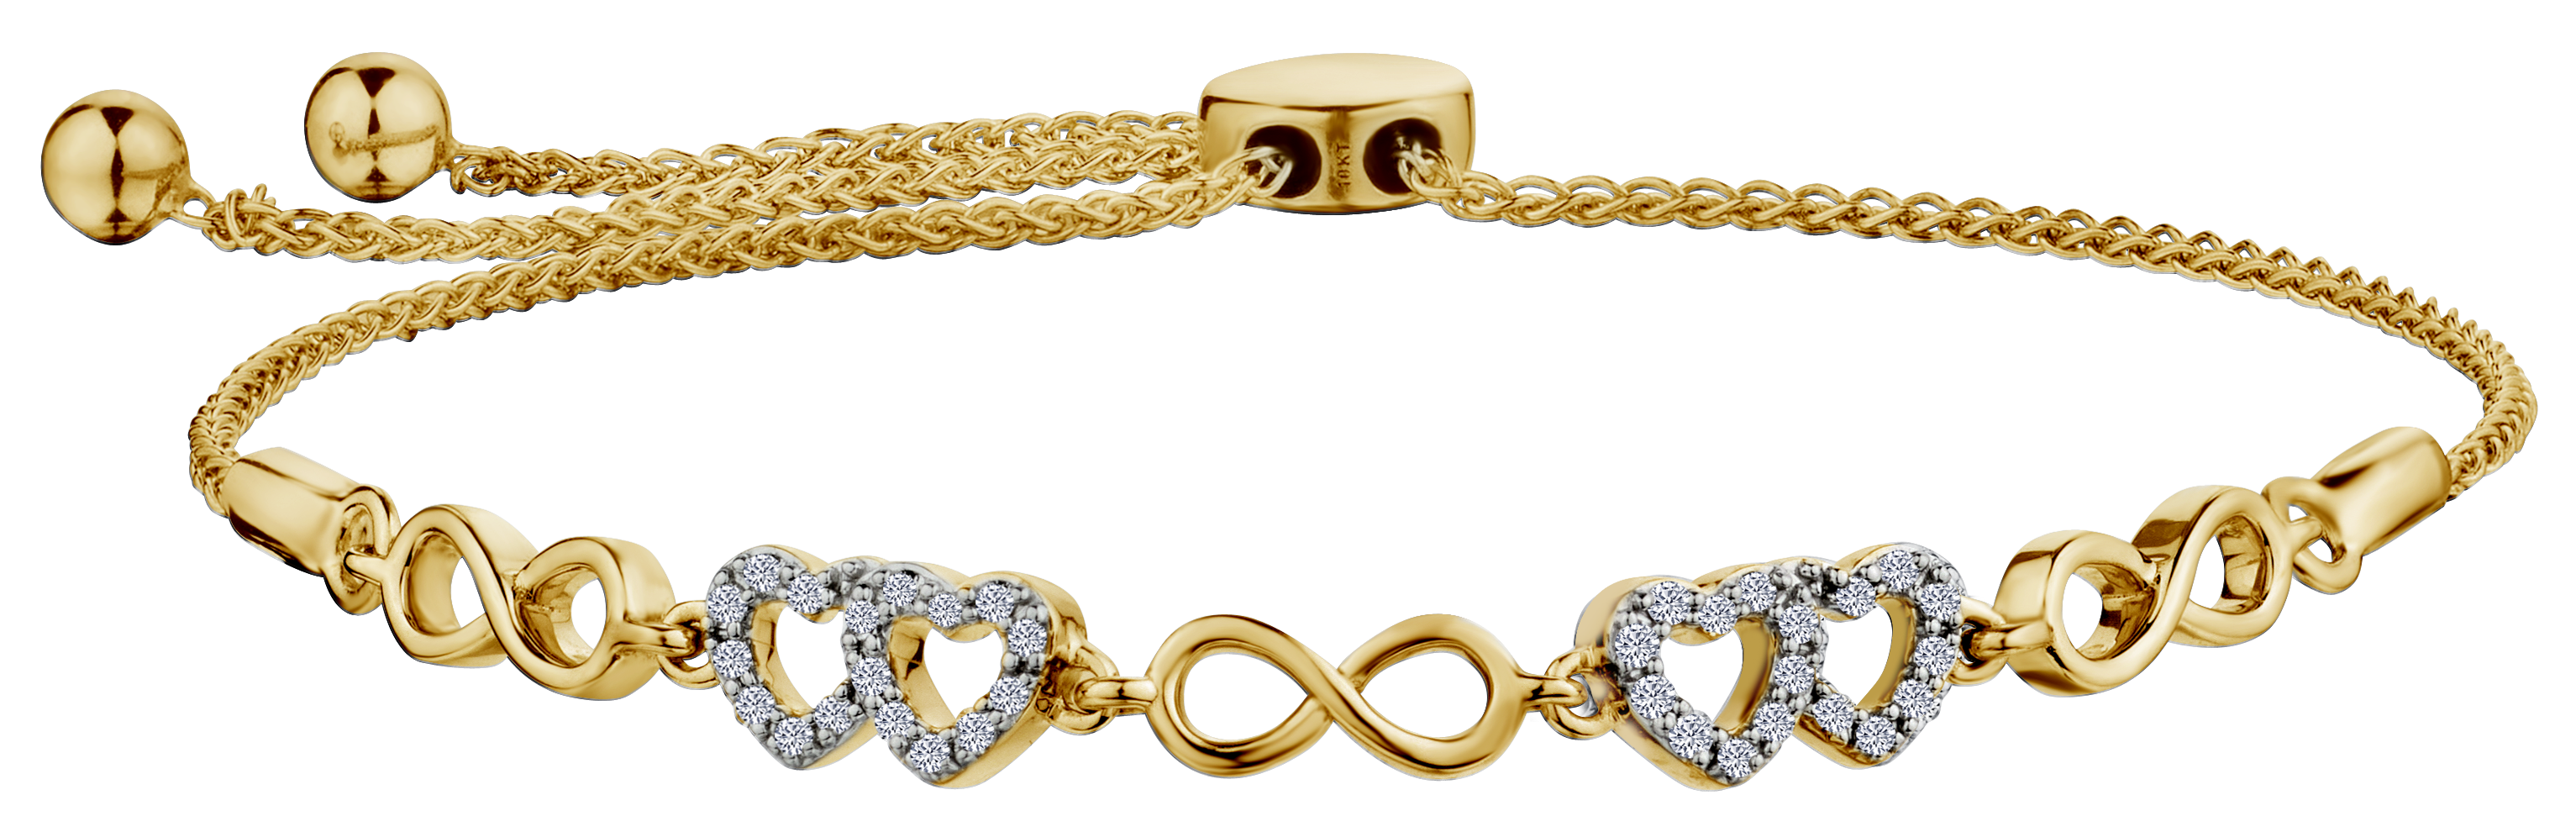 .16 Carat of Diamonds "Infinite Hearts" Bolo Bracelet, 10kt Yellow Gold.....................NOW